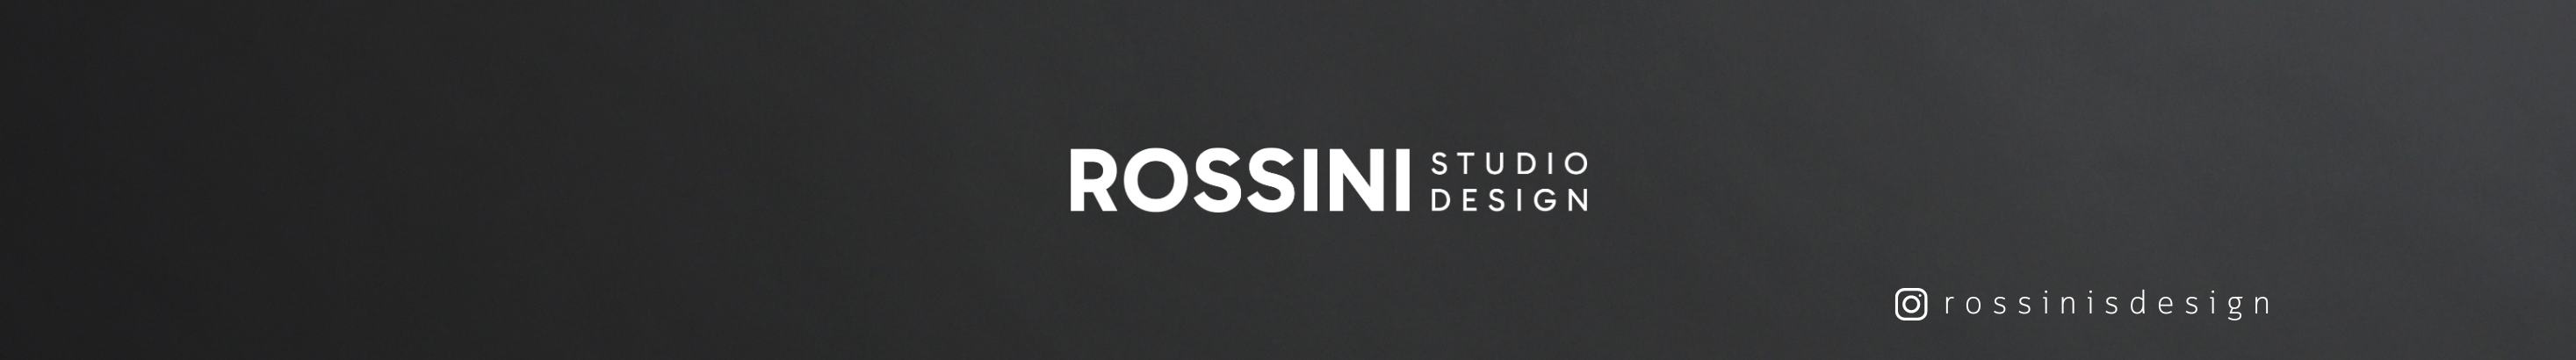 Lucas Rossini's profile banner